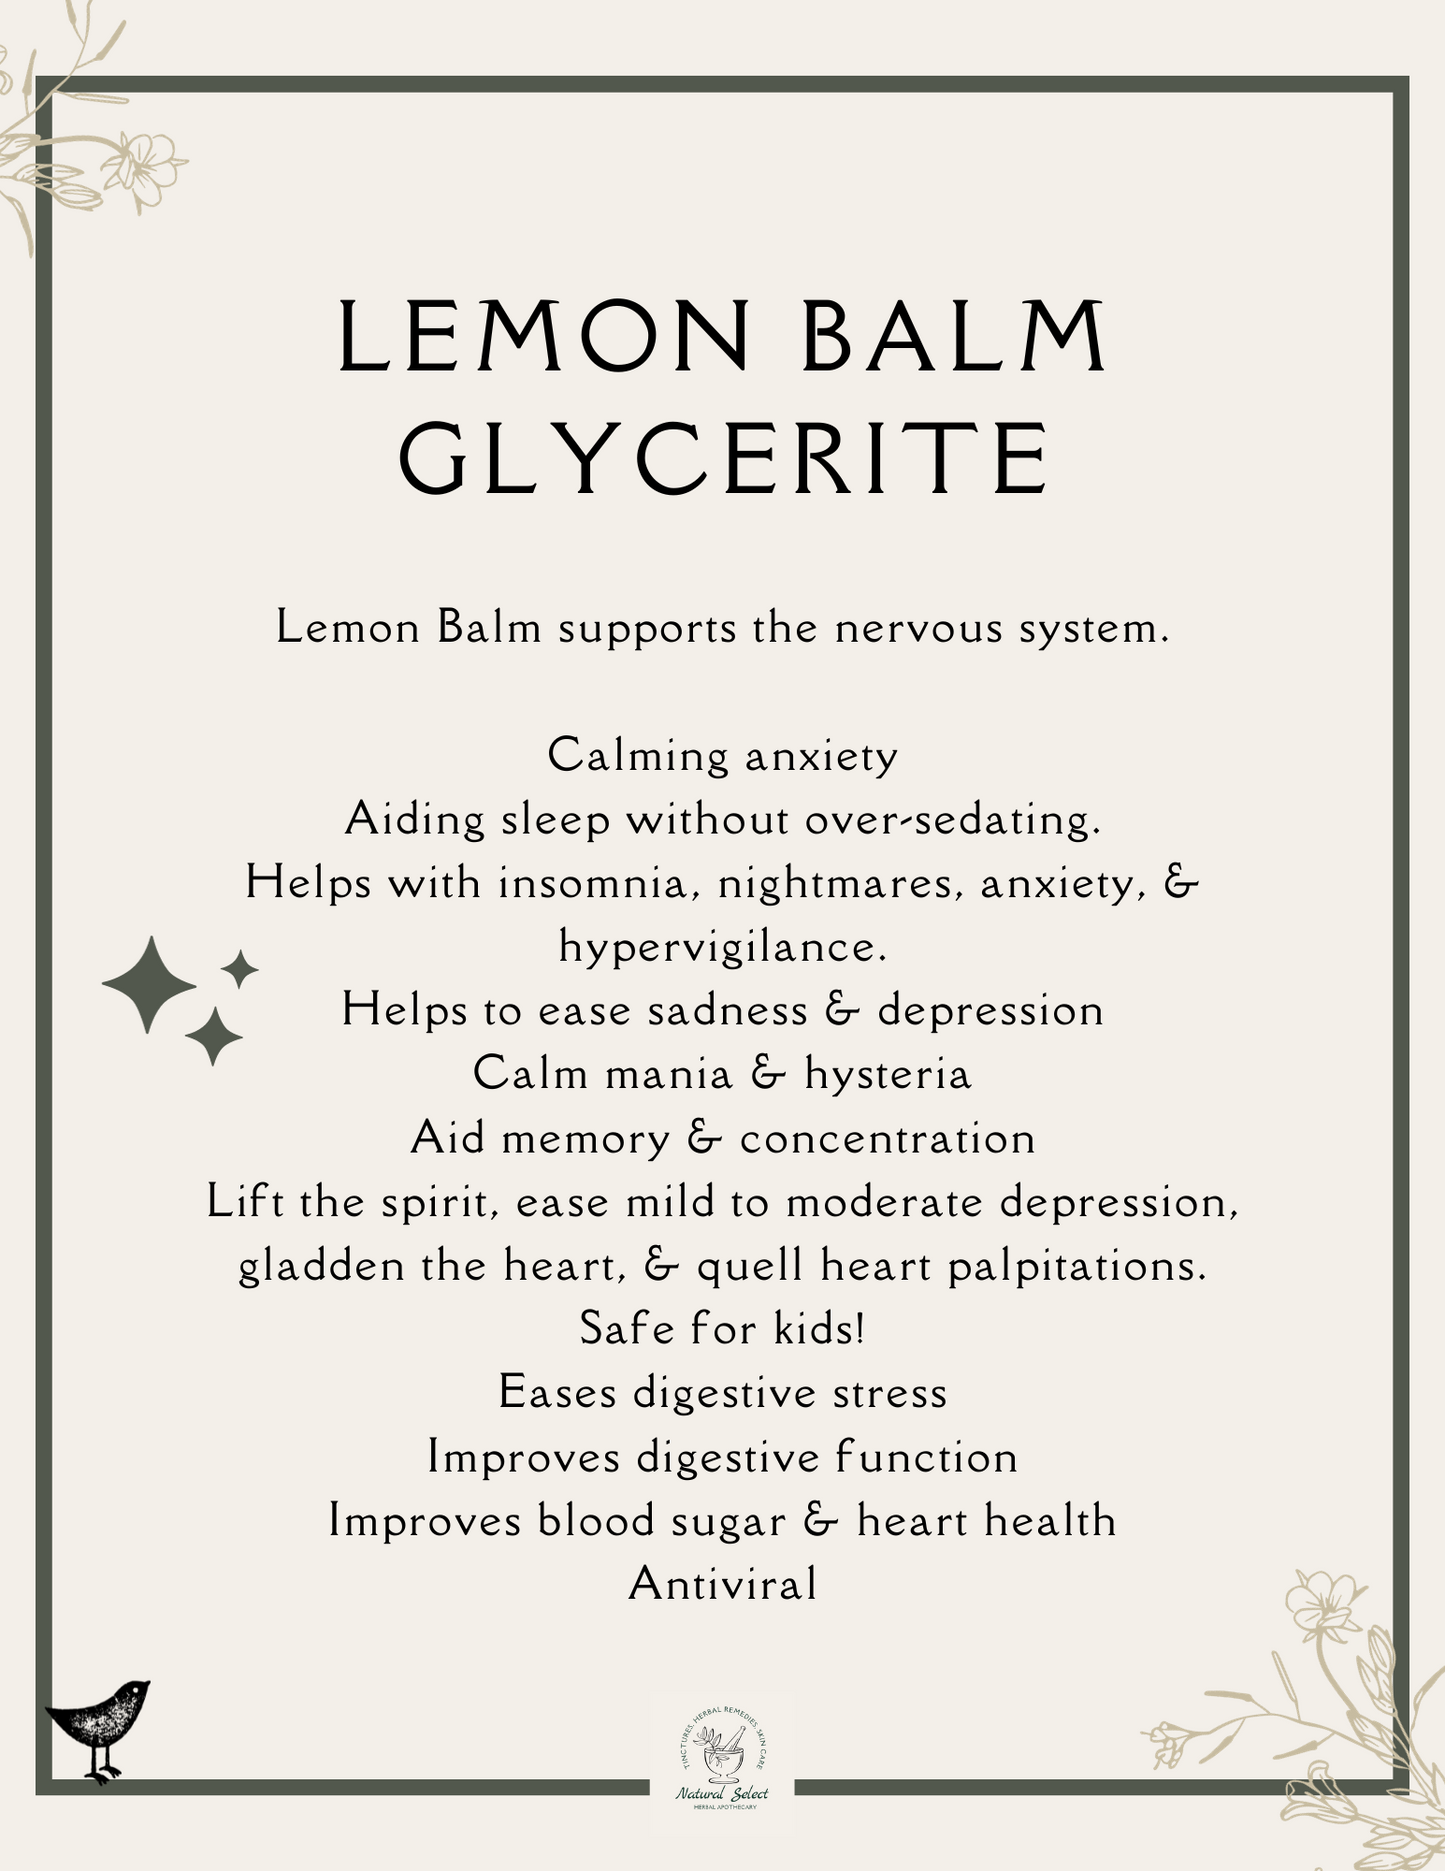 Lemon Balm Glycerite